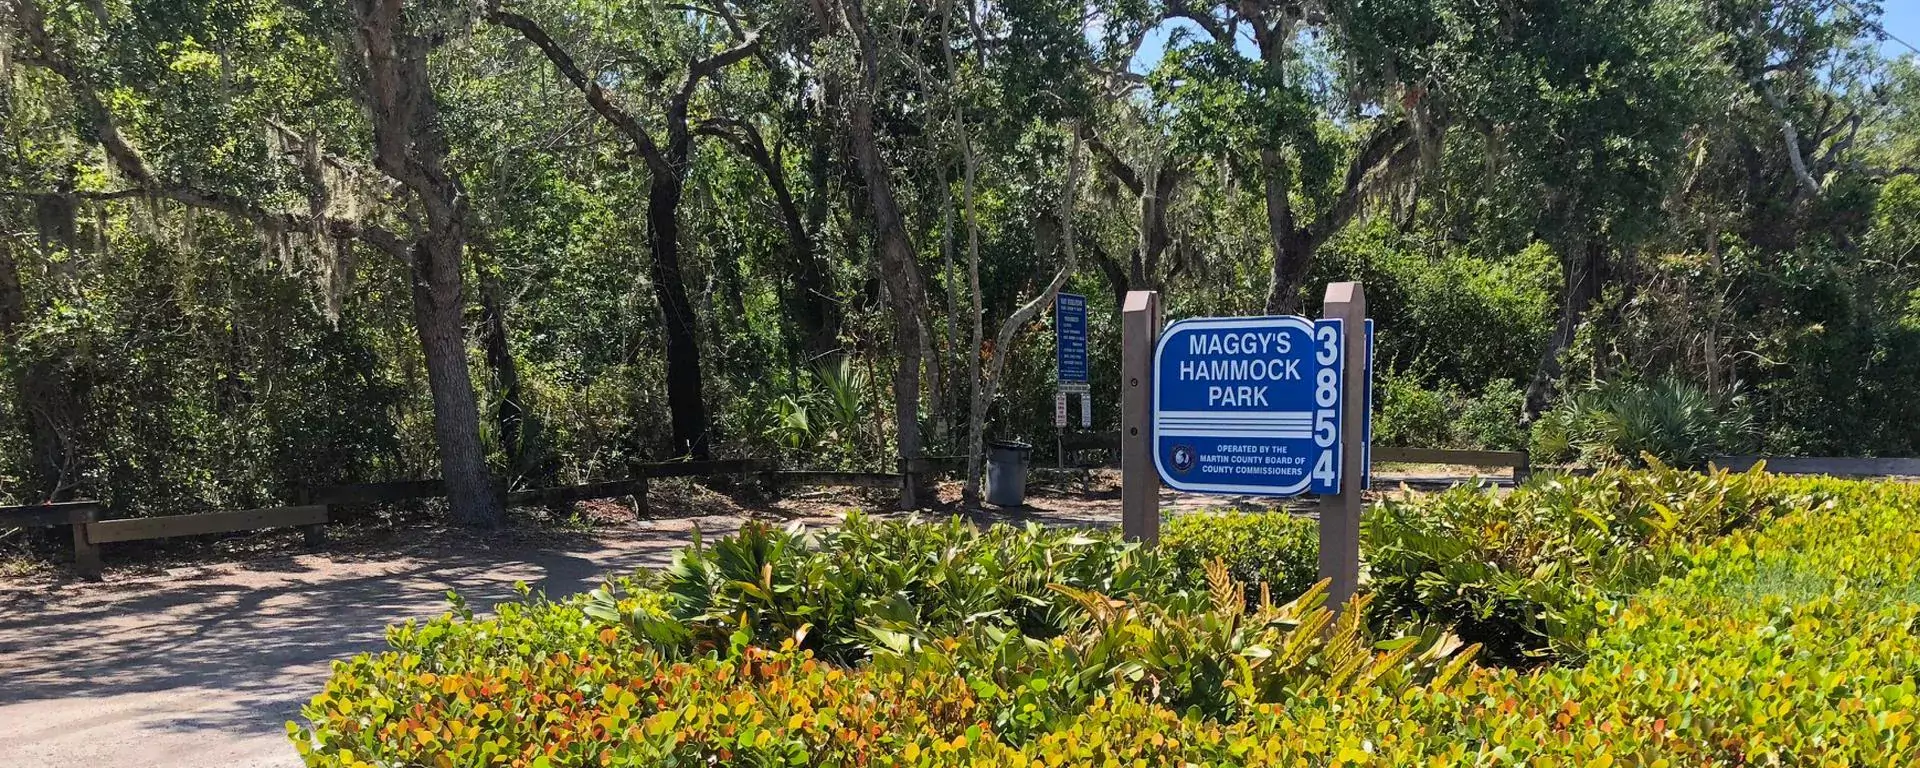 Signage at Maggy's Hammock Park